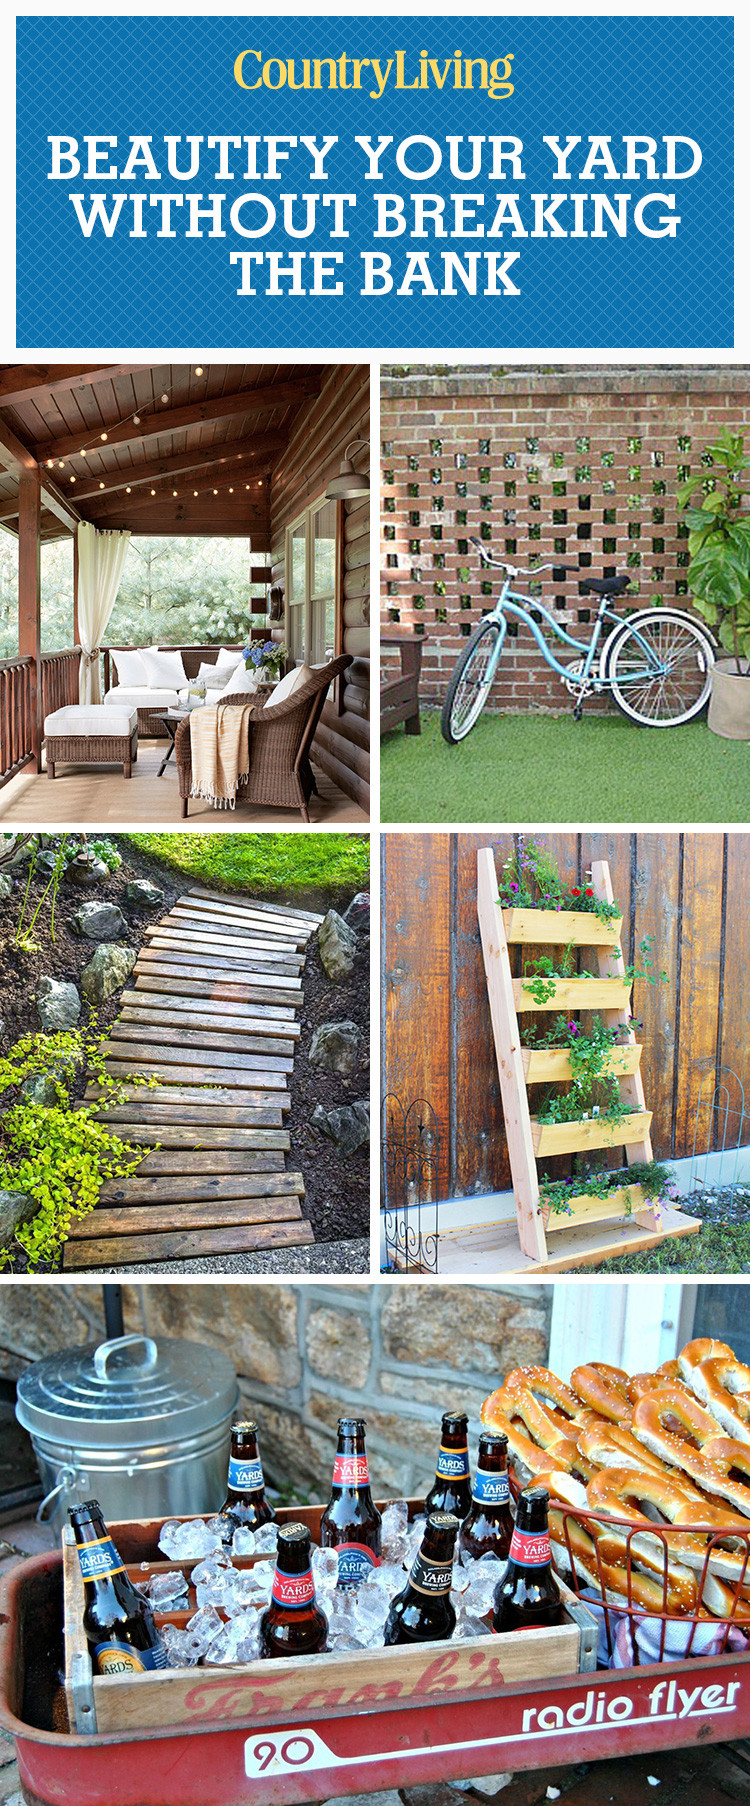 Diy Backyard Decorations
 54 DIY Backyard Design Ideas DIY Backyard Decor Tips